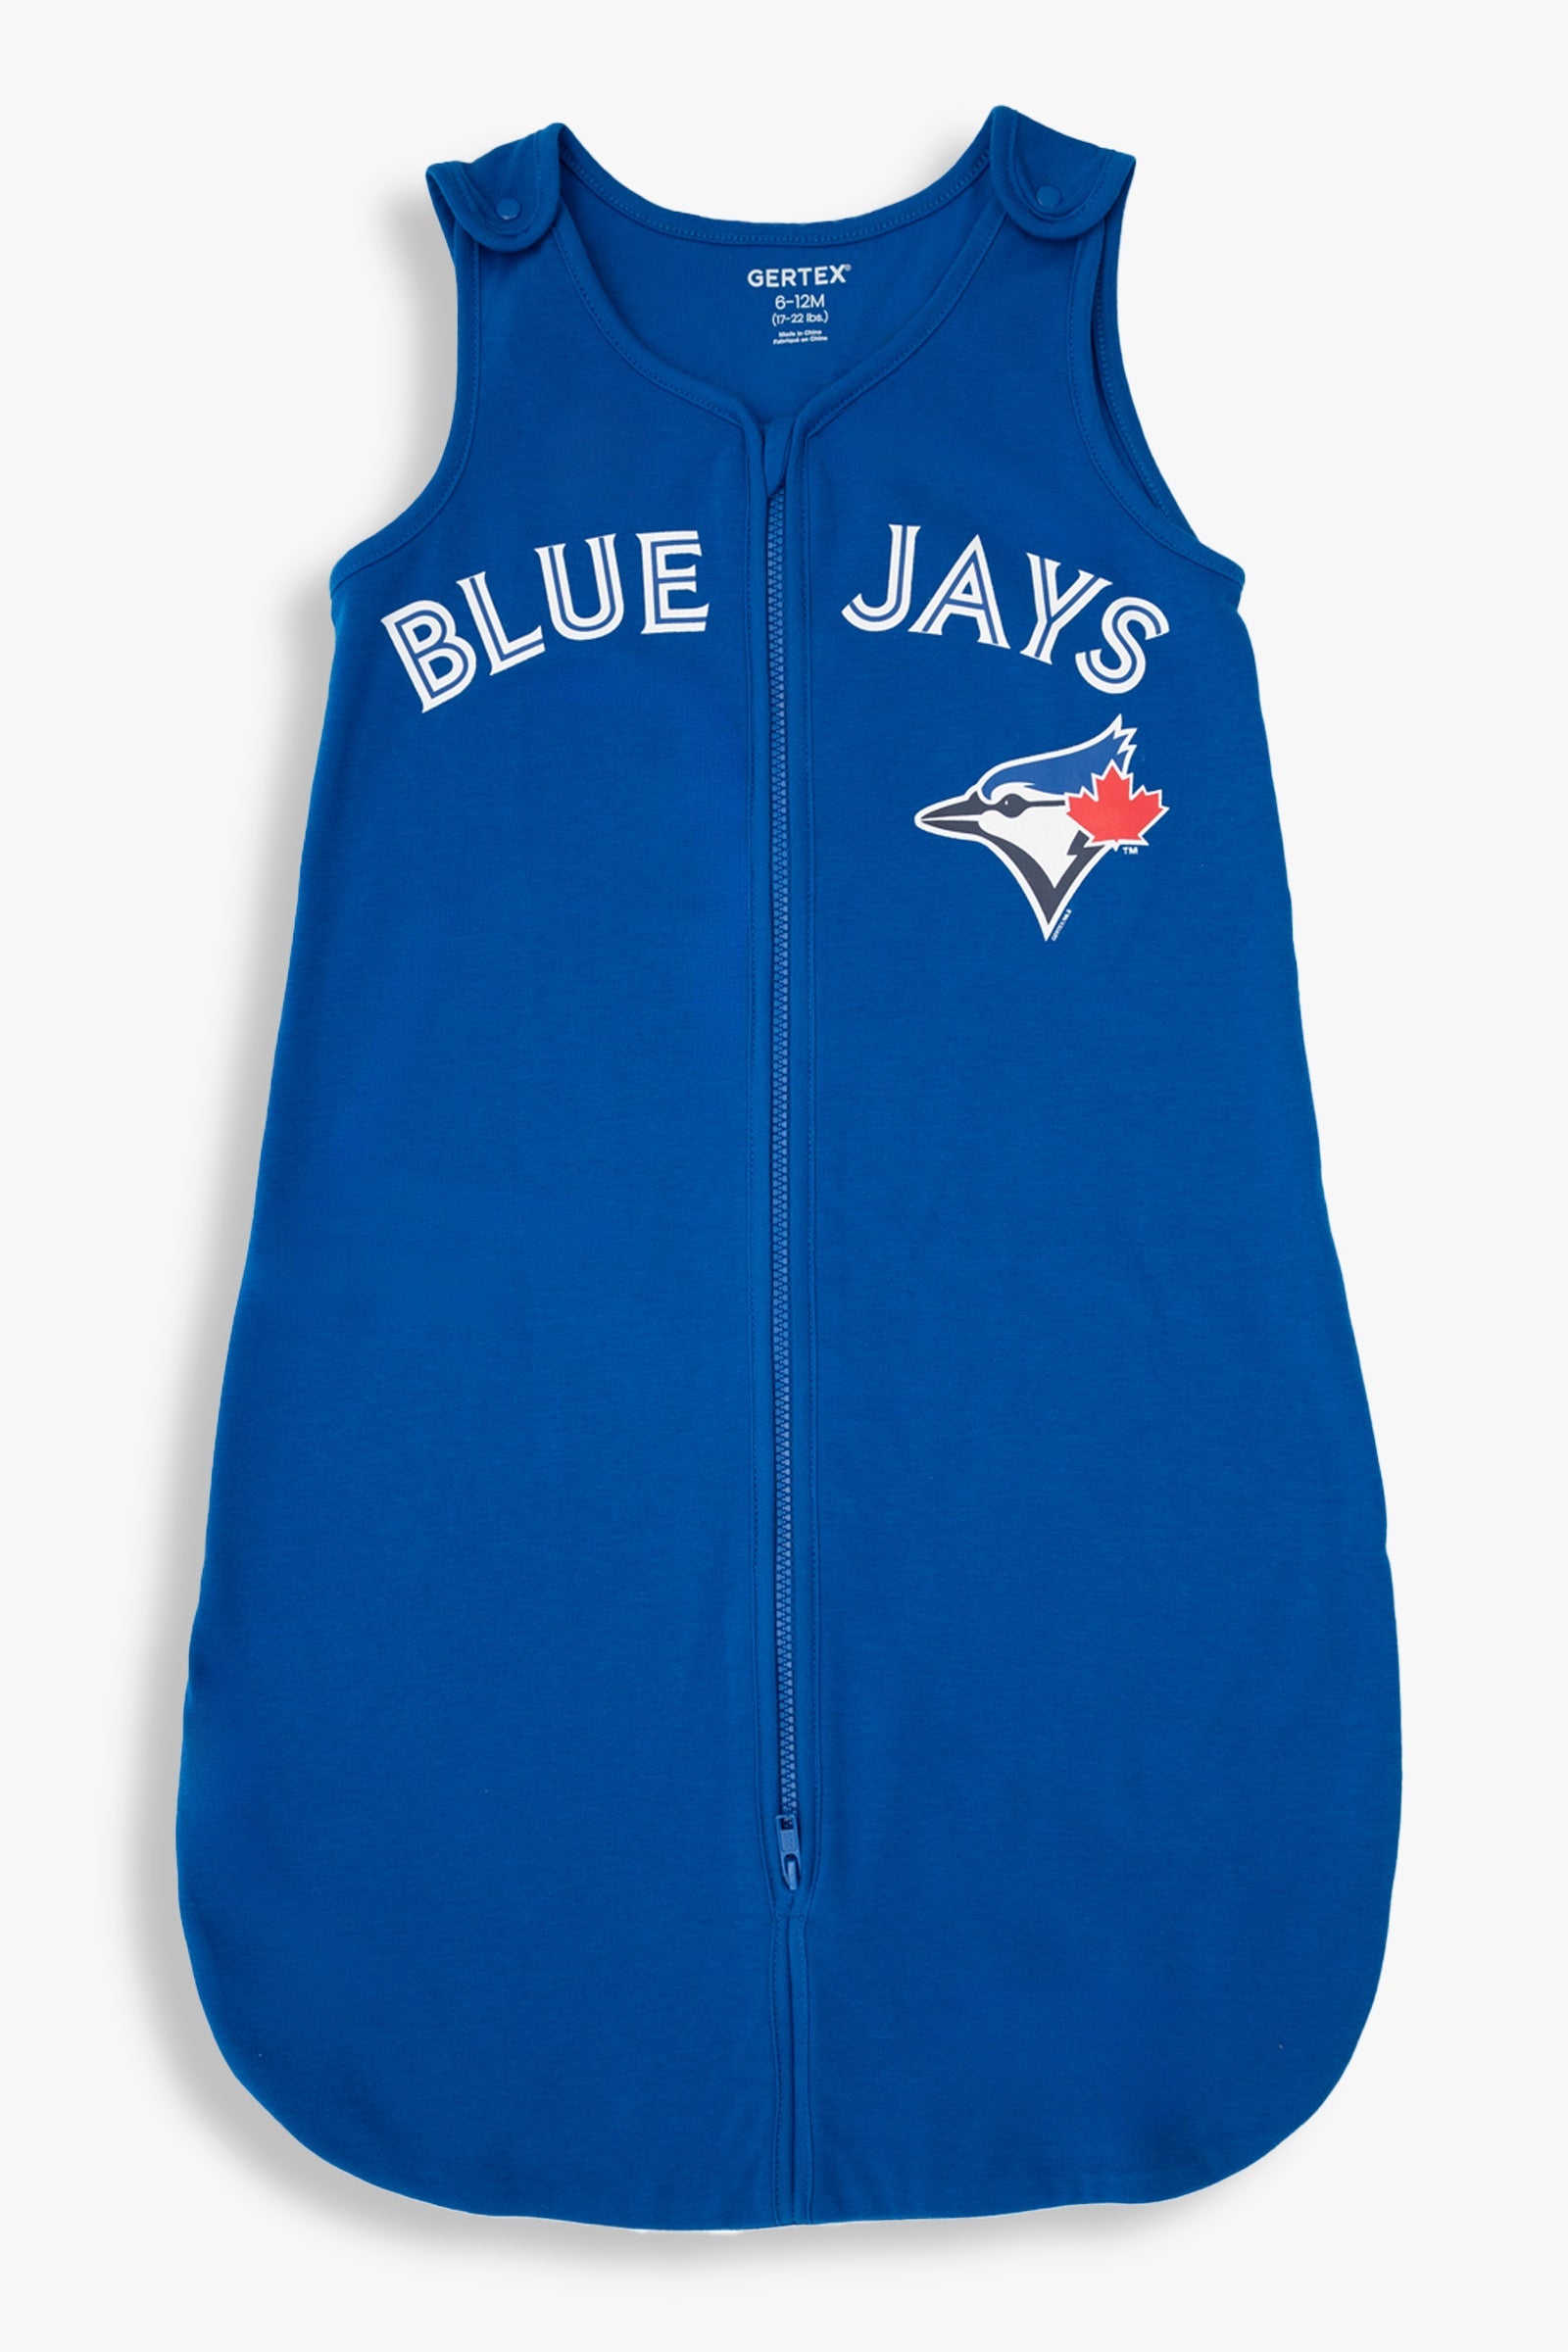 Blue Jays newborn/baby clothes Toronto baseball baby Blue Jays baby gift